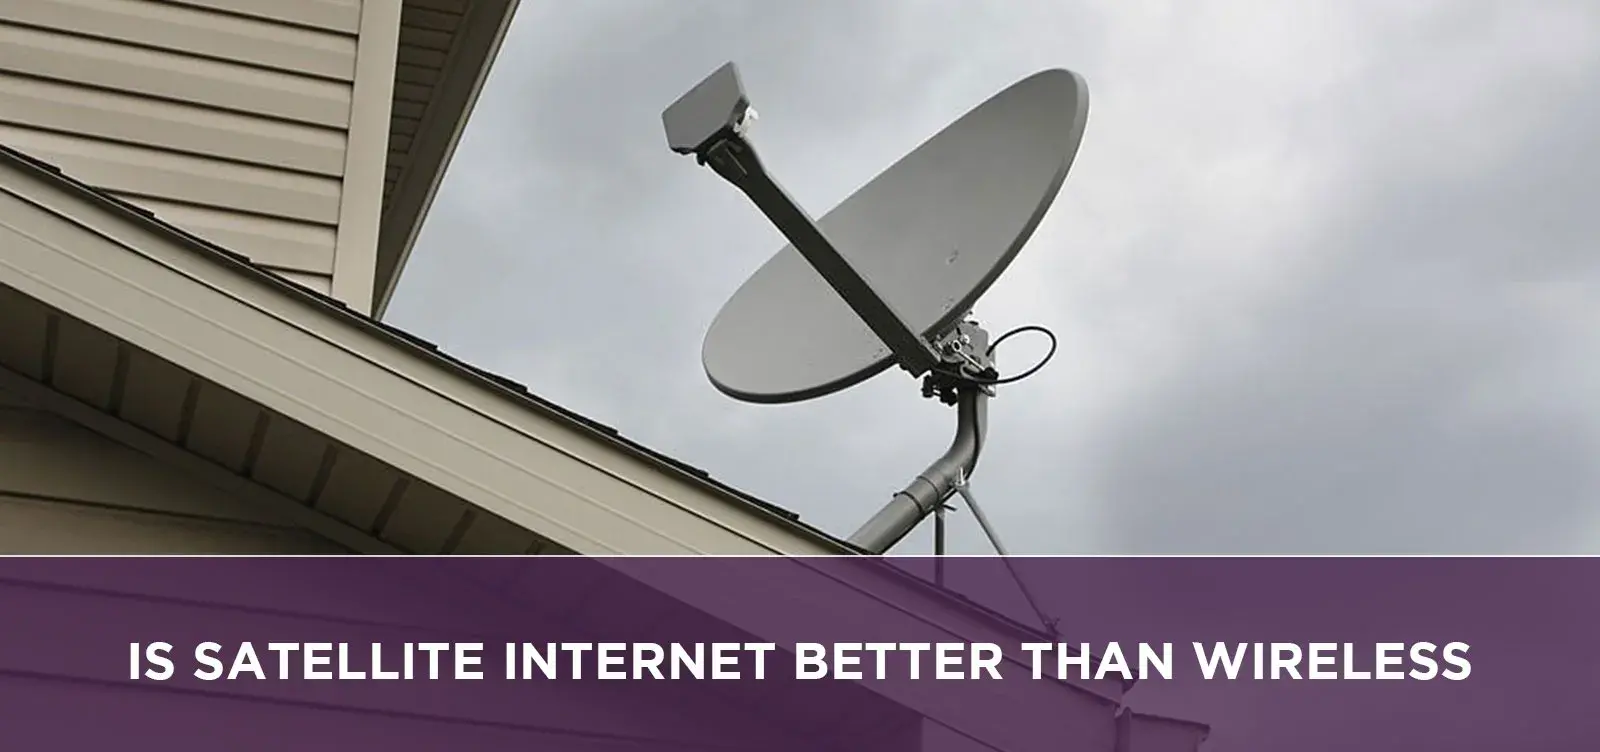 Is Satellite Internet Better Than Wireless?